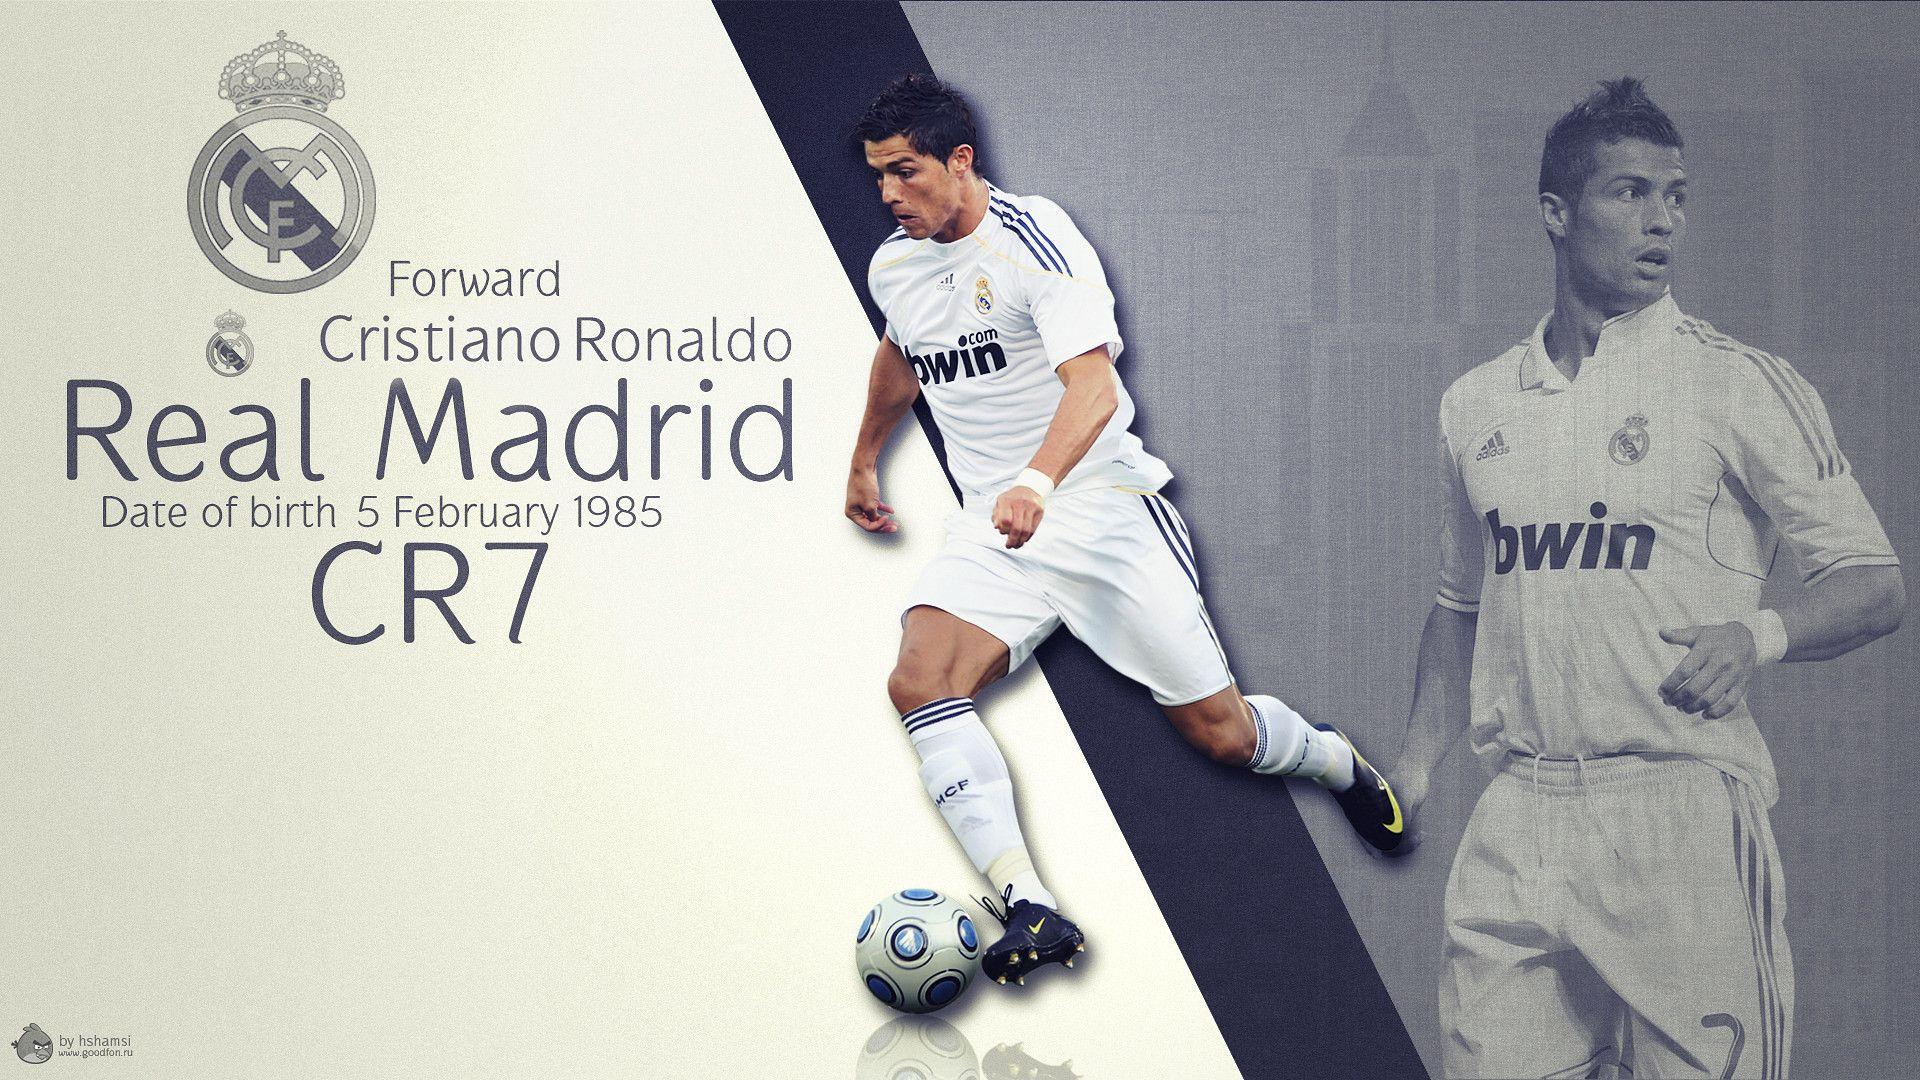 Cristiano Ronaldo Real Madrid 2015 Wallpaper 8. The Art Mad